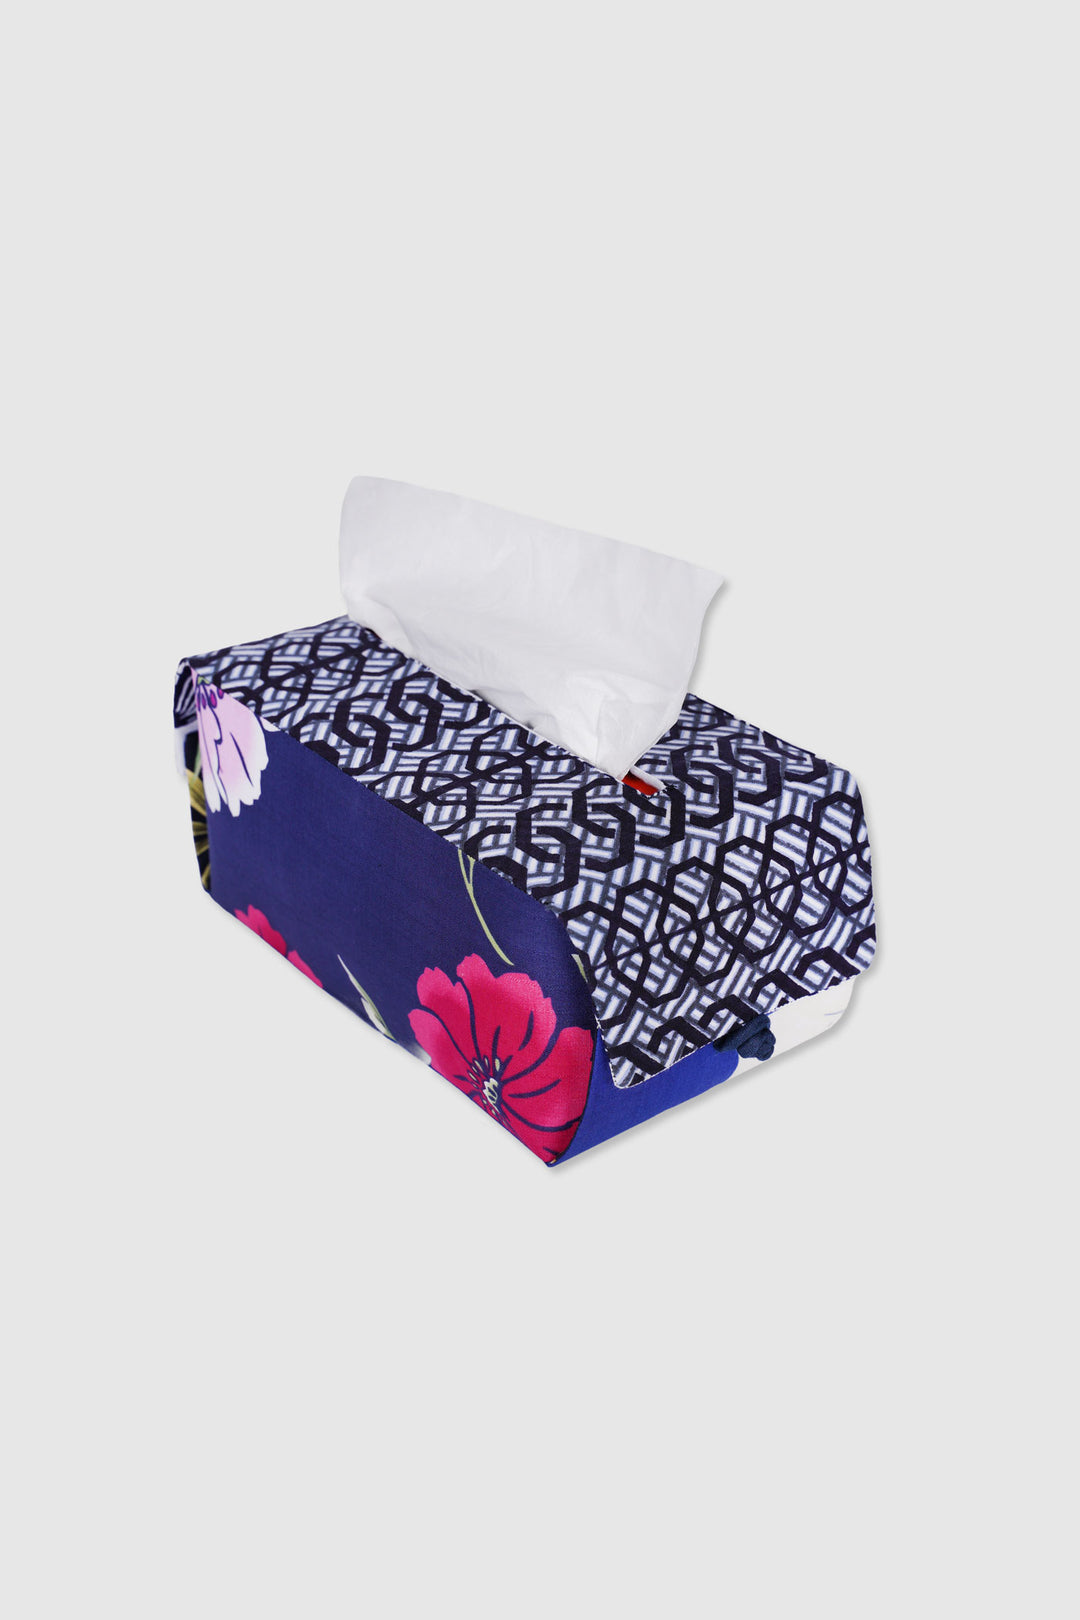 Japanese Yukata Cotton Patchwork for a Contemporary Tissue Box